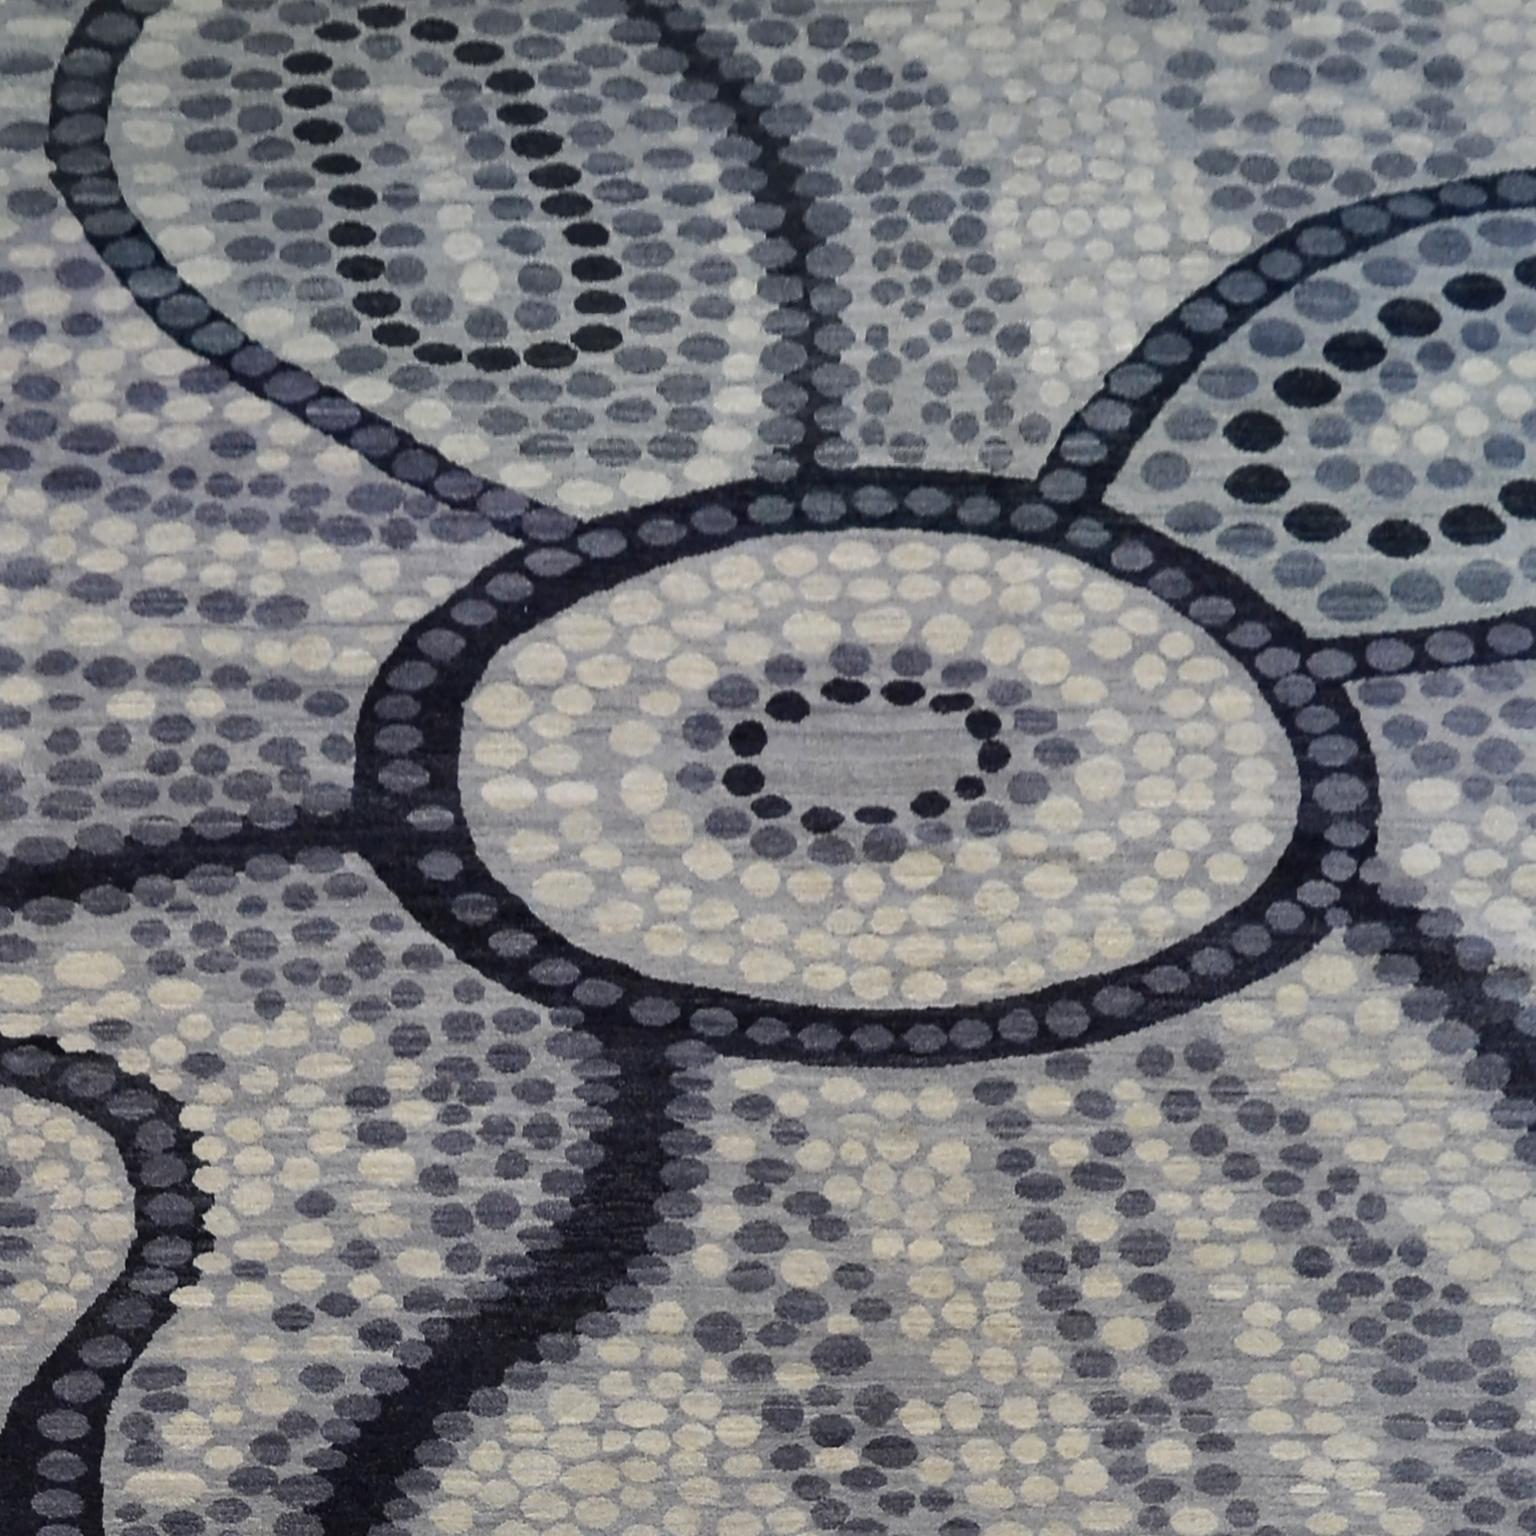 Modern Orley Shabahang Signature “Bulga” Carpet in Pure Handspun Wool and Organic Dyes